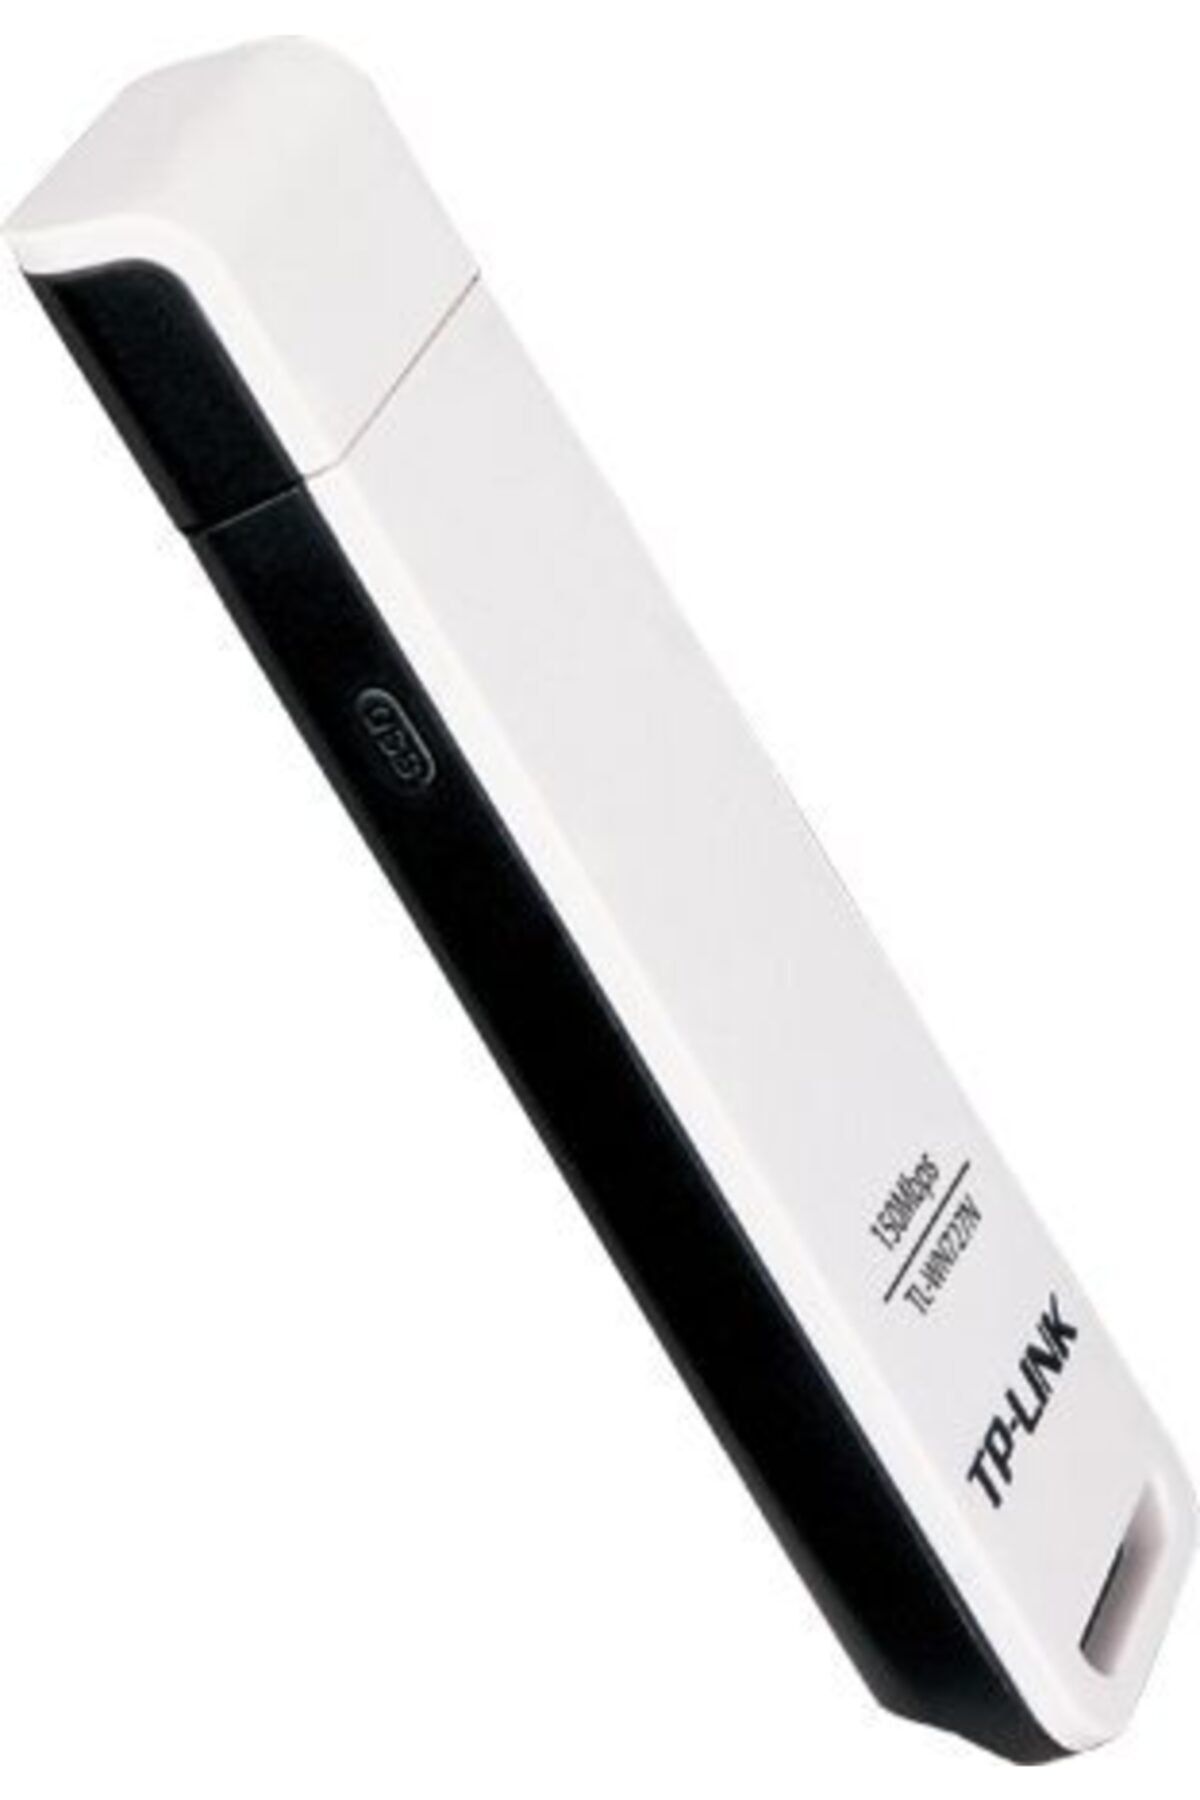 Tp-Link TL-WN727N 150Mbp USB Ethernet (sony psp)